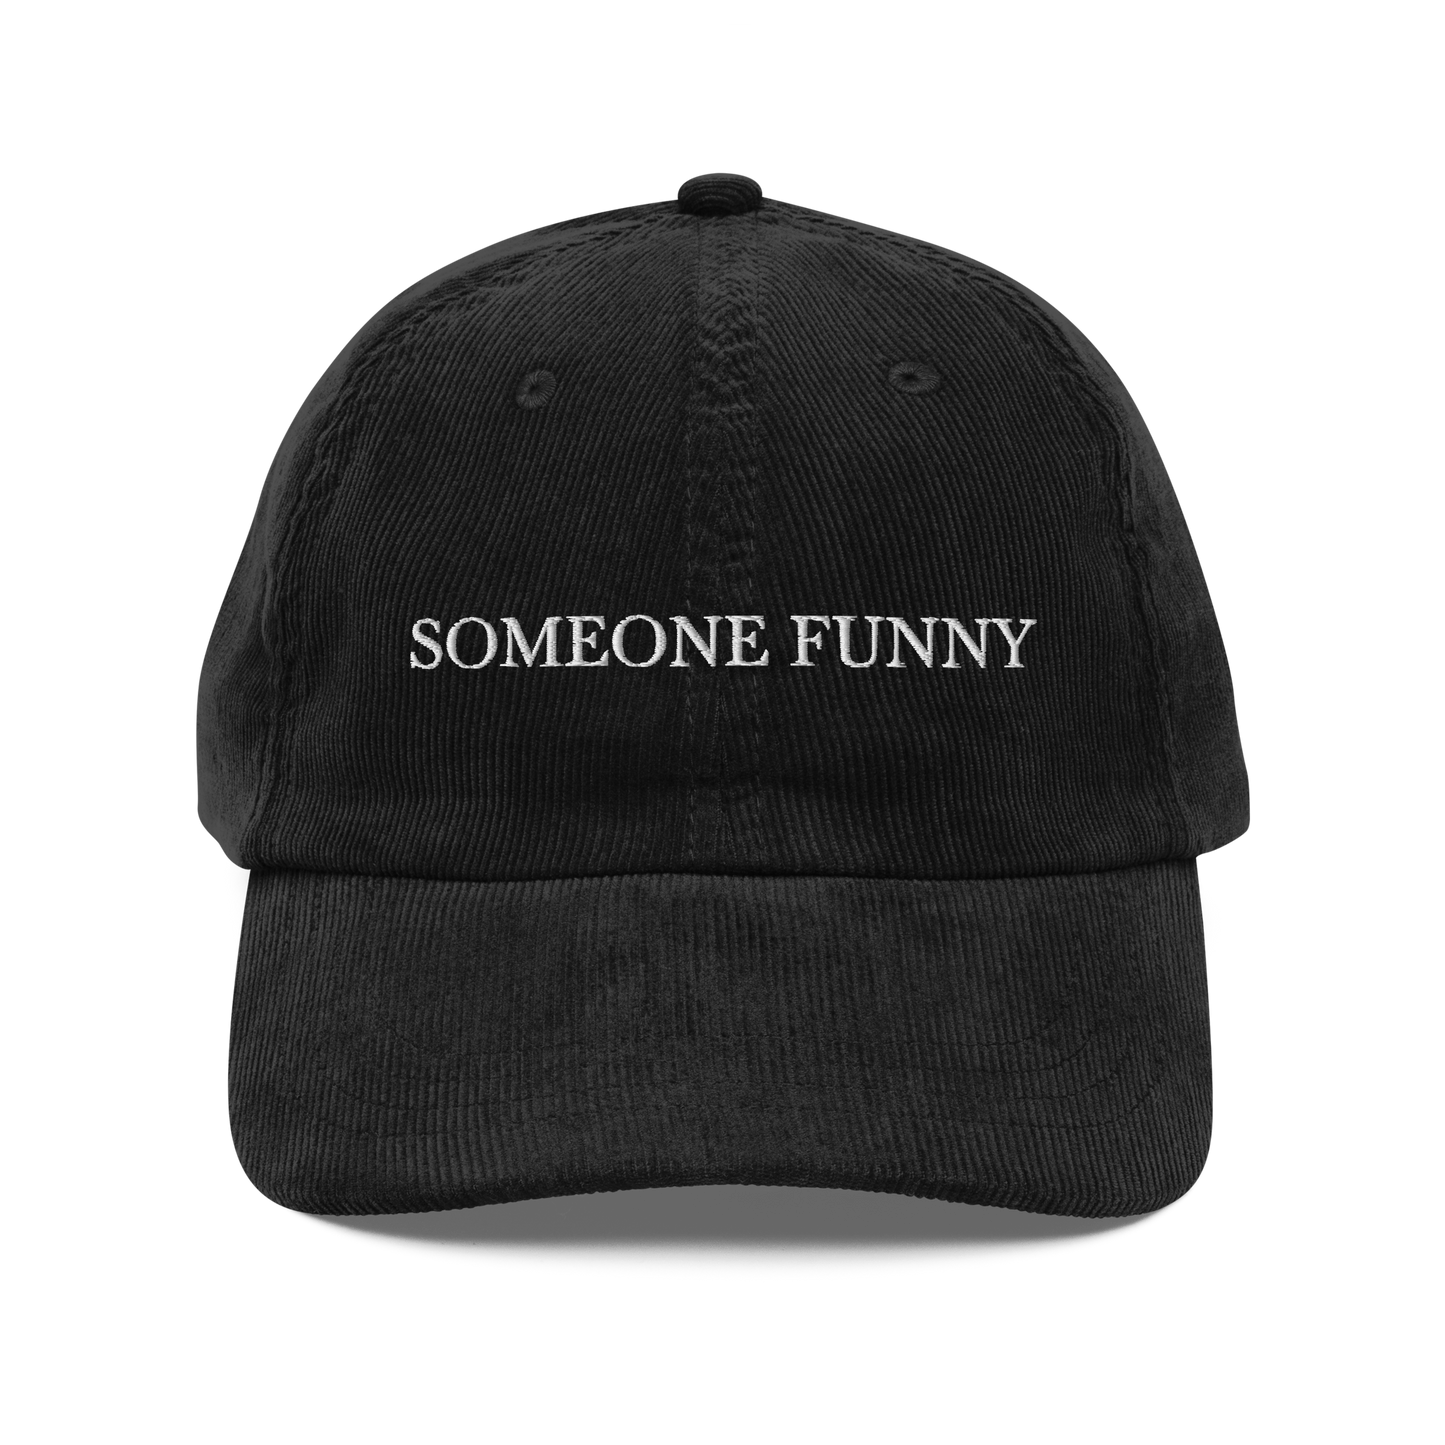 Someone Funny Corduroy Hat